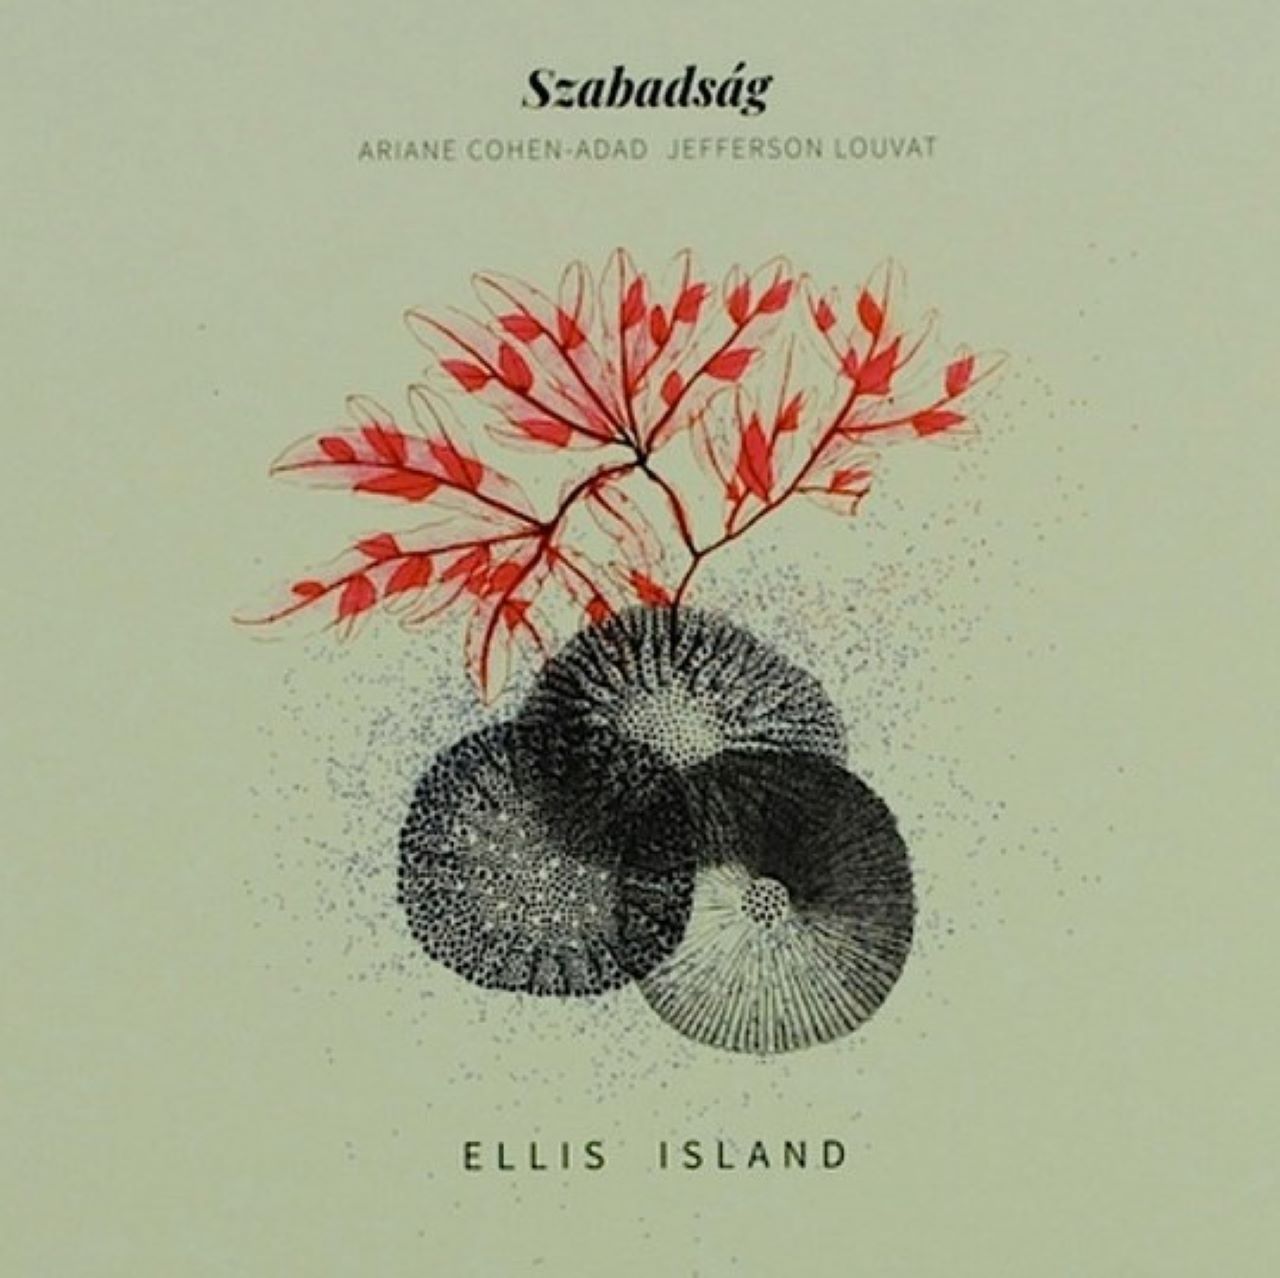 Szabadsag - Ariane Cohen-Adad & Jefferson Louvat - Ellis Island cover album